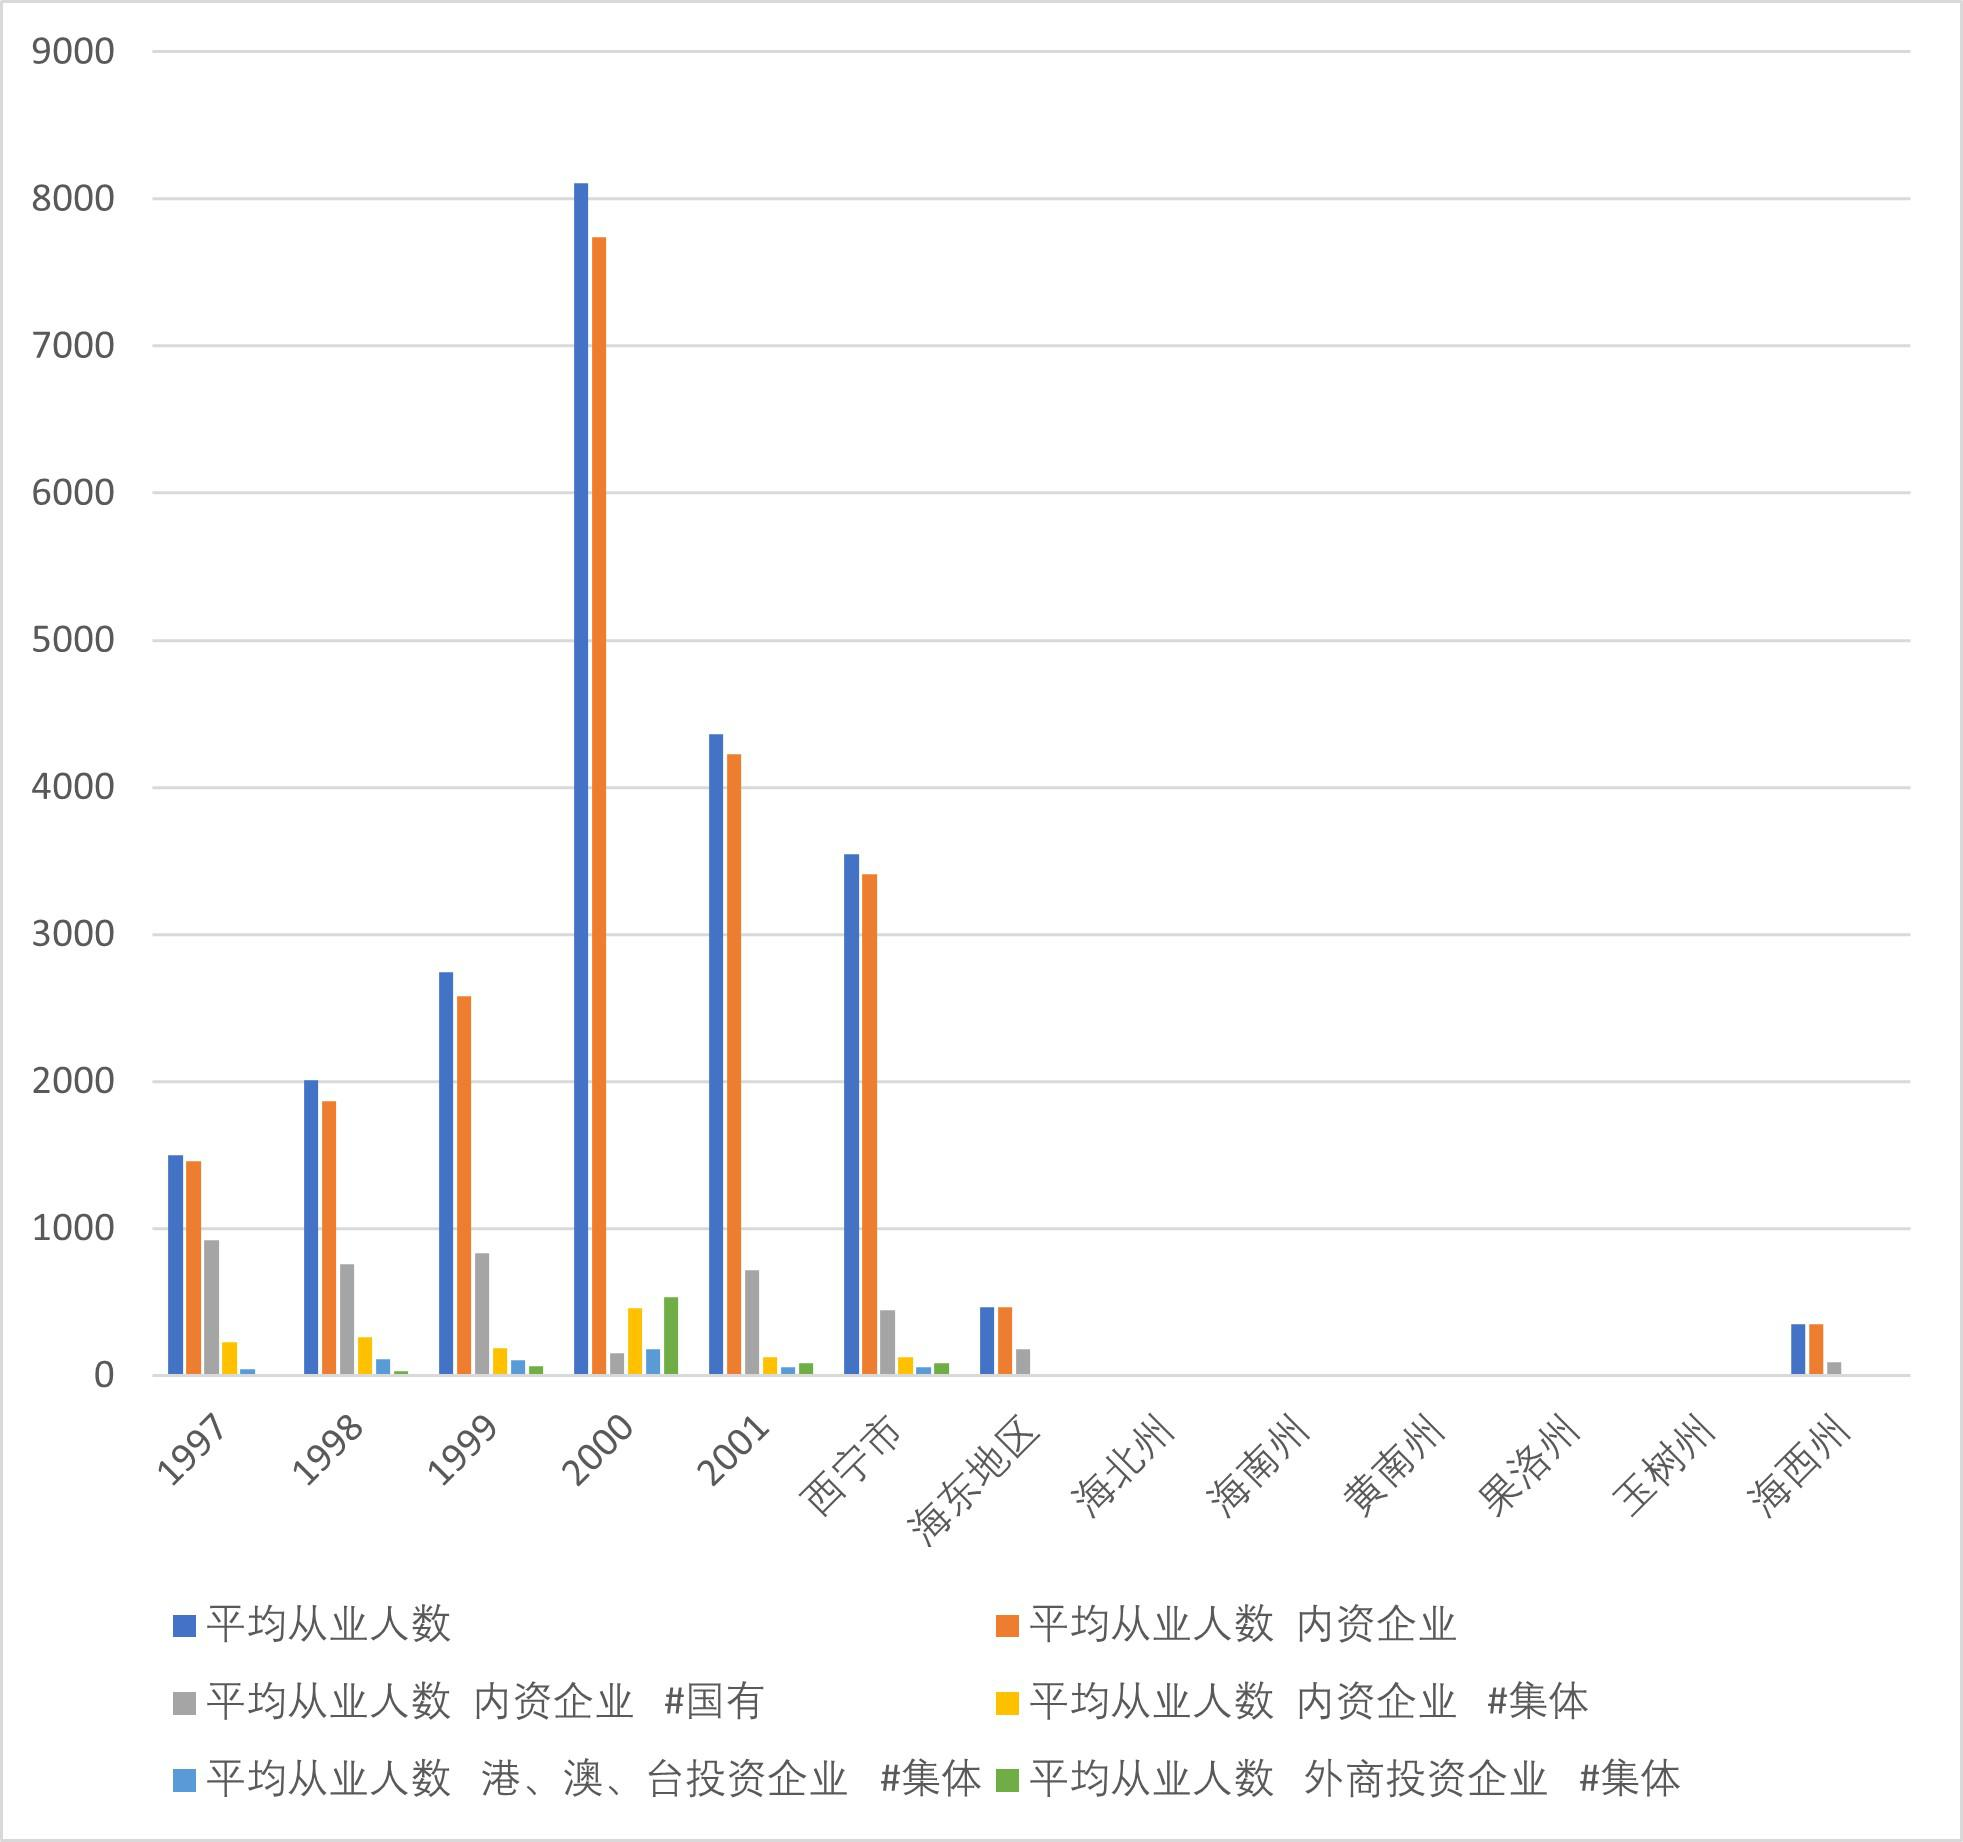 Statistical data of real estate development enterprises in Qinghai Province (1997-2018)